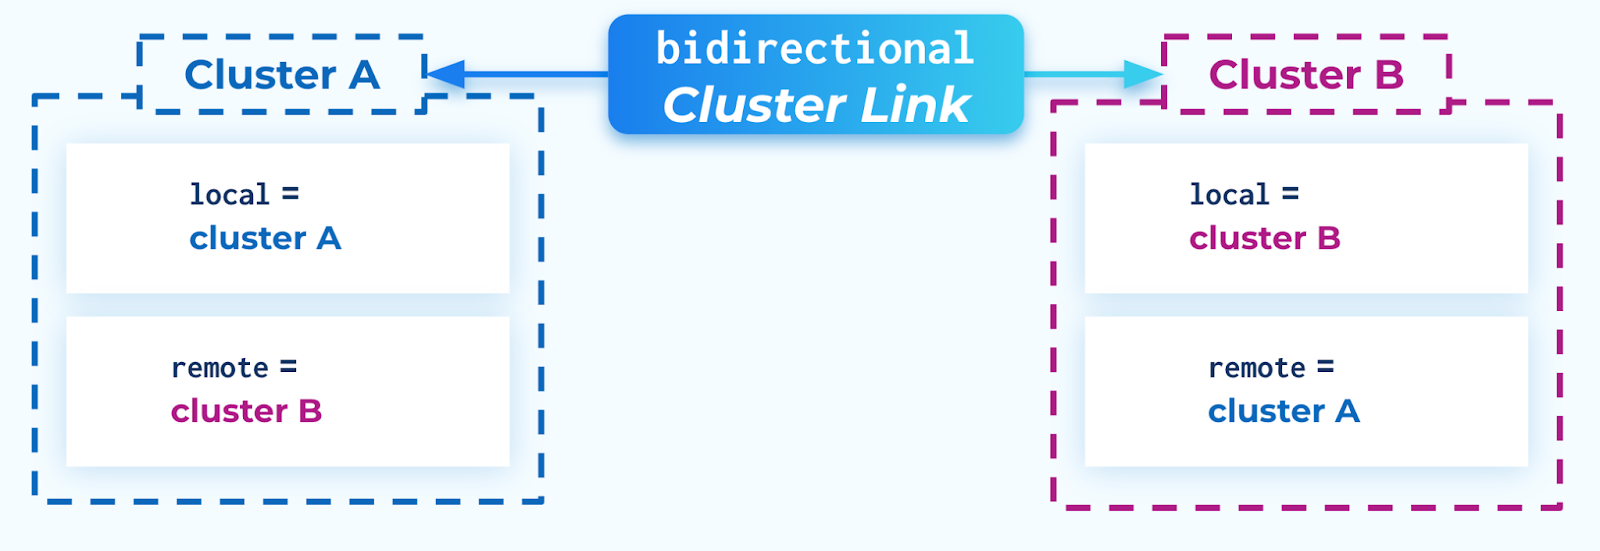 ../../_images/cluster-link-bidirectional-both.png